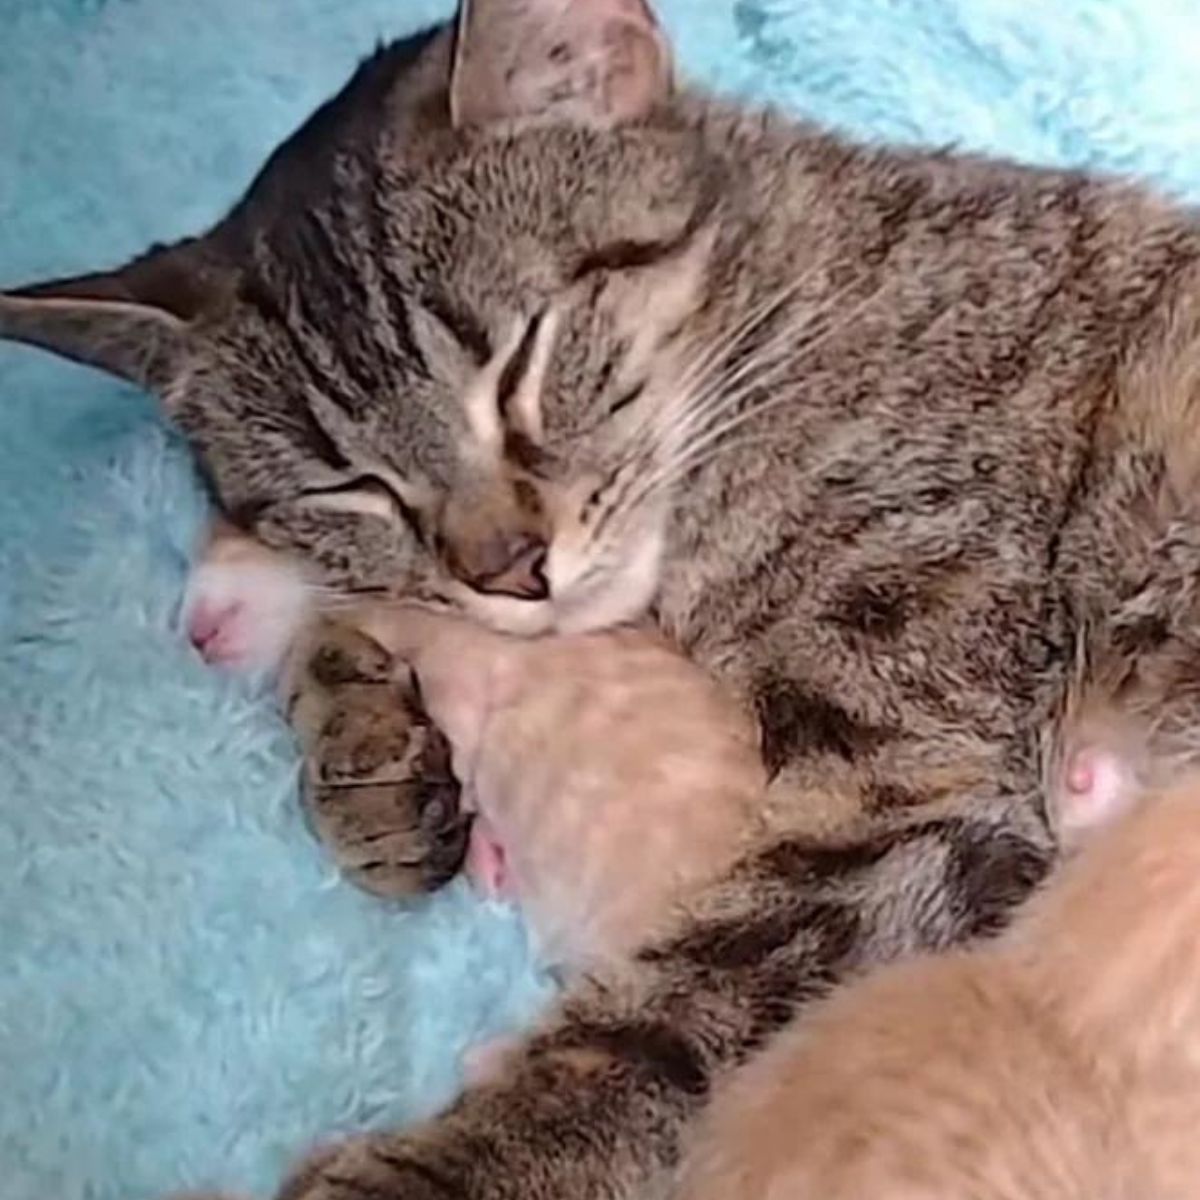 cat cuddling with a kitten